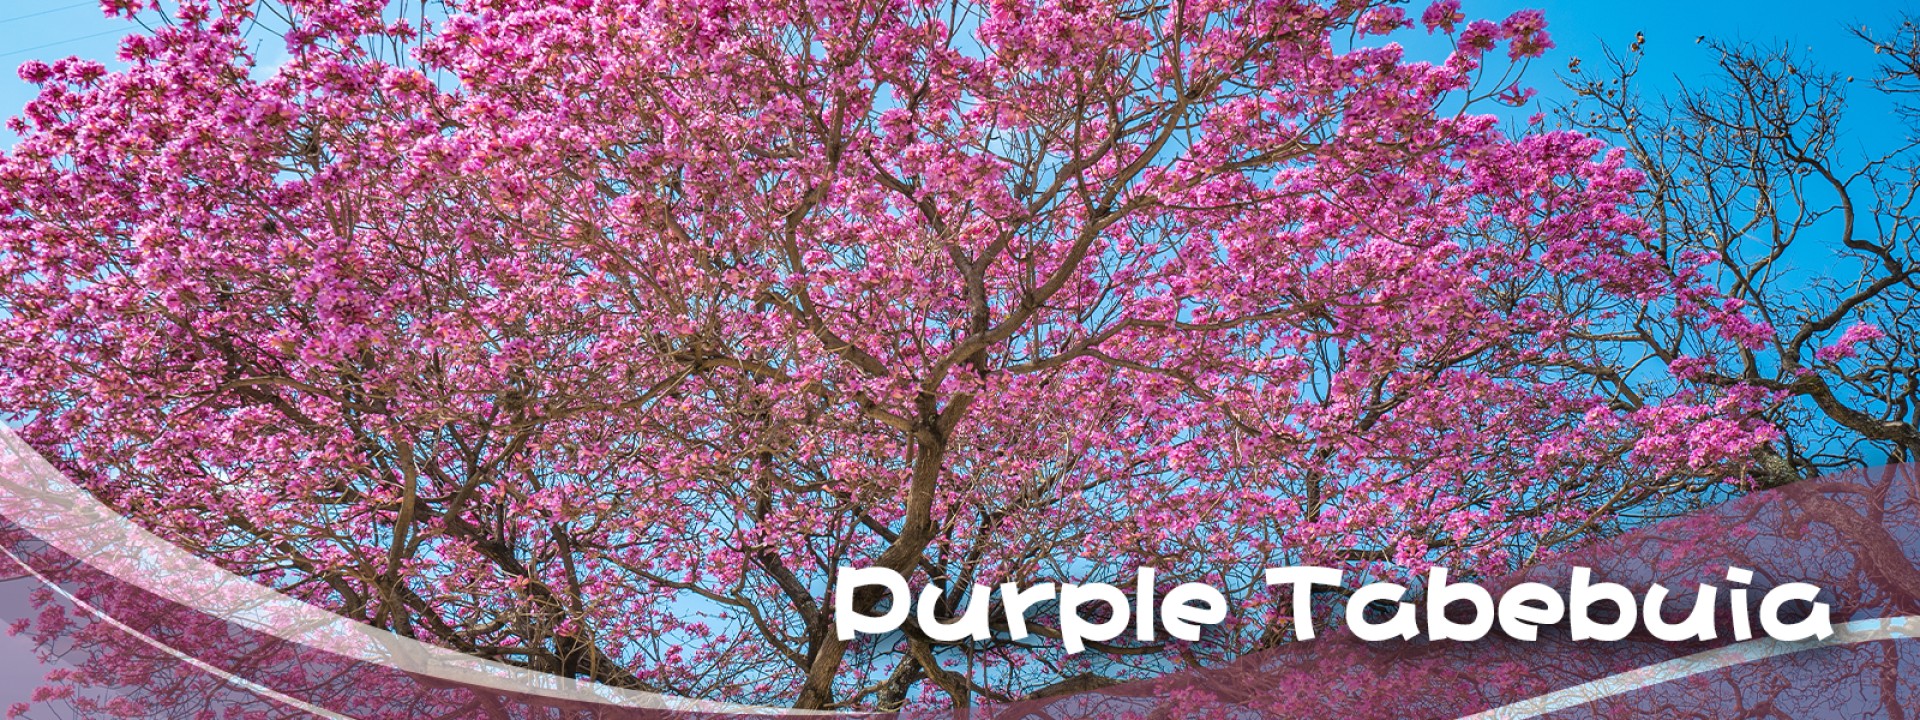 Purple Tabebuia